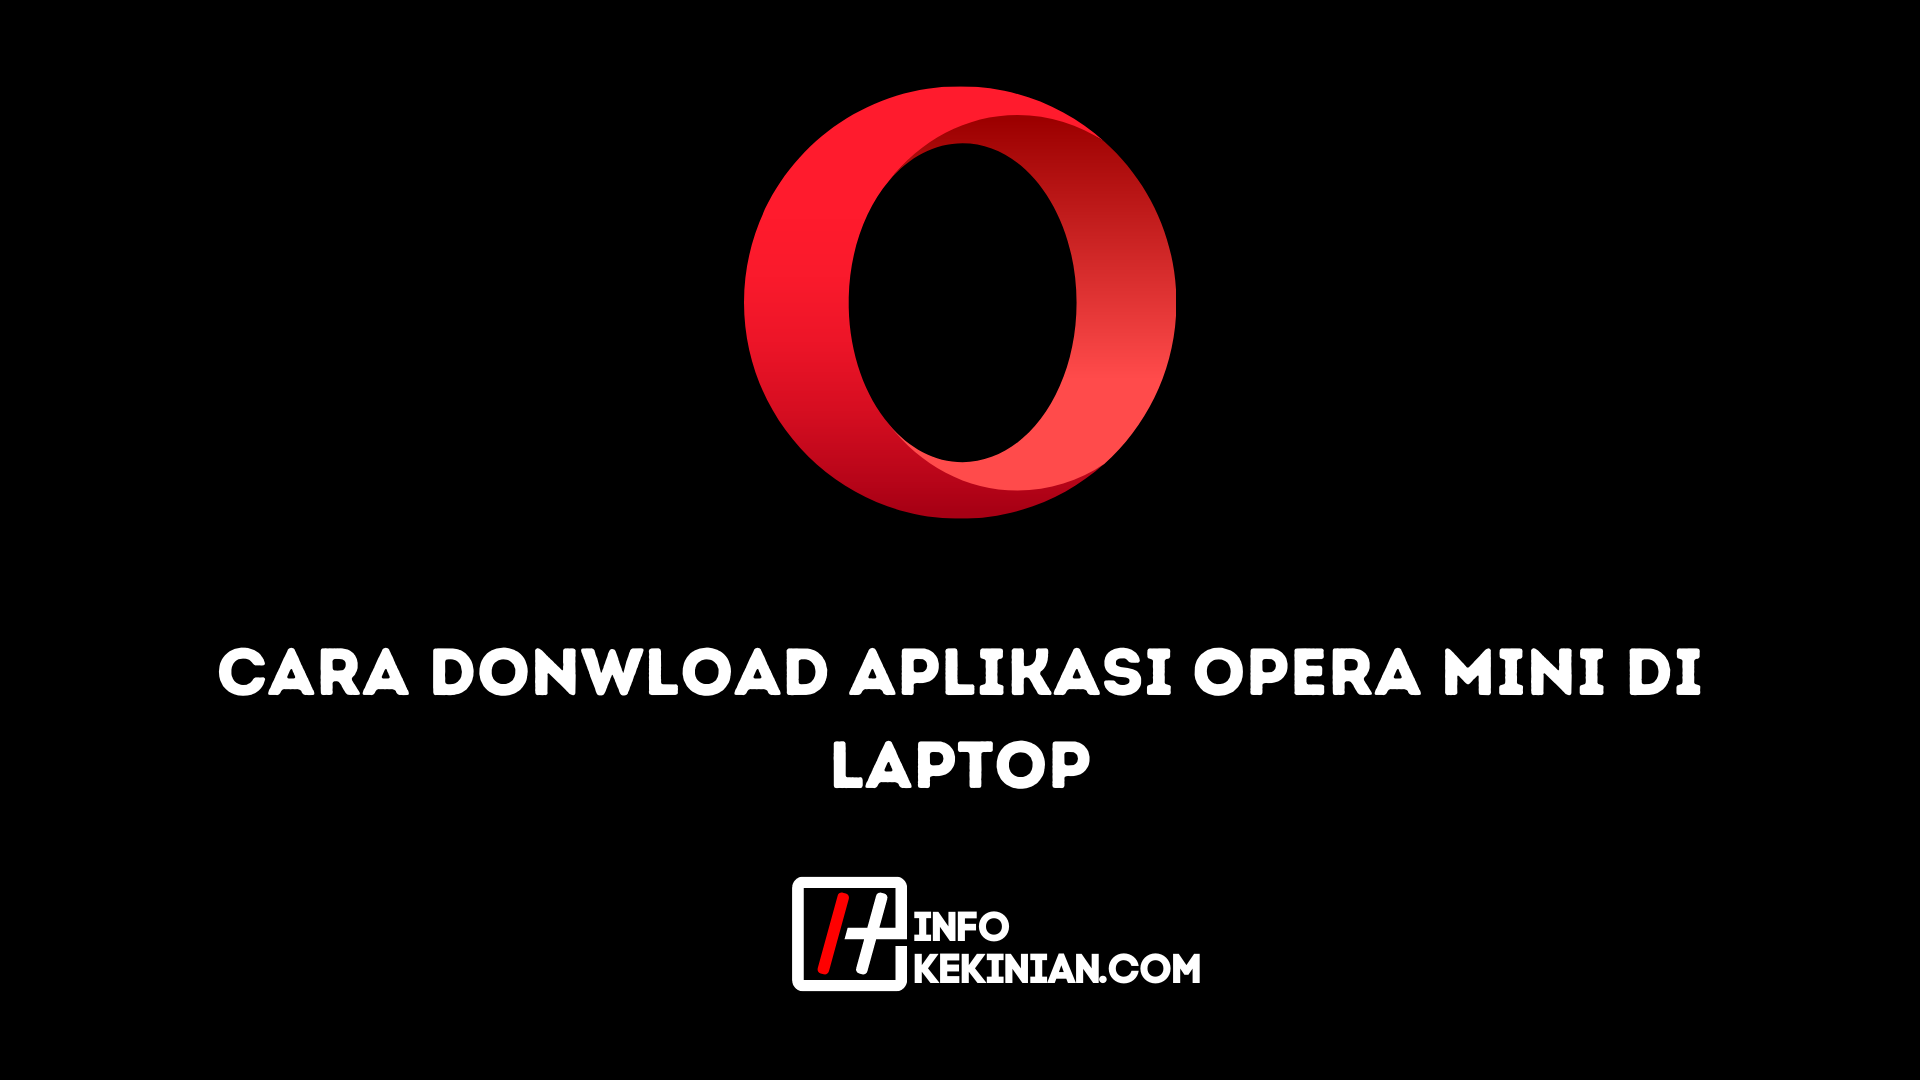 Cara Donwload Aplikasi Opera Mini di Laptop